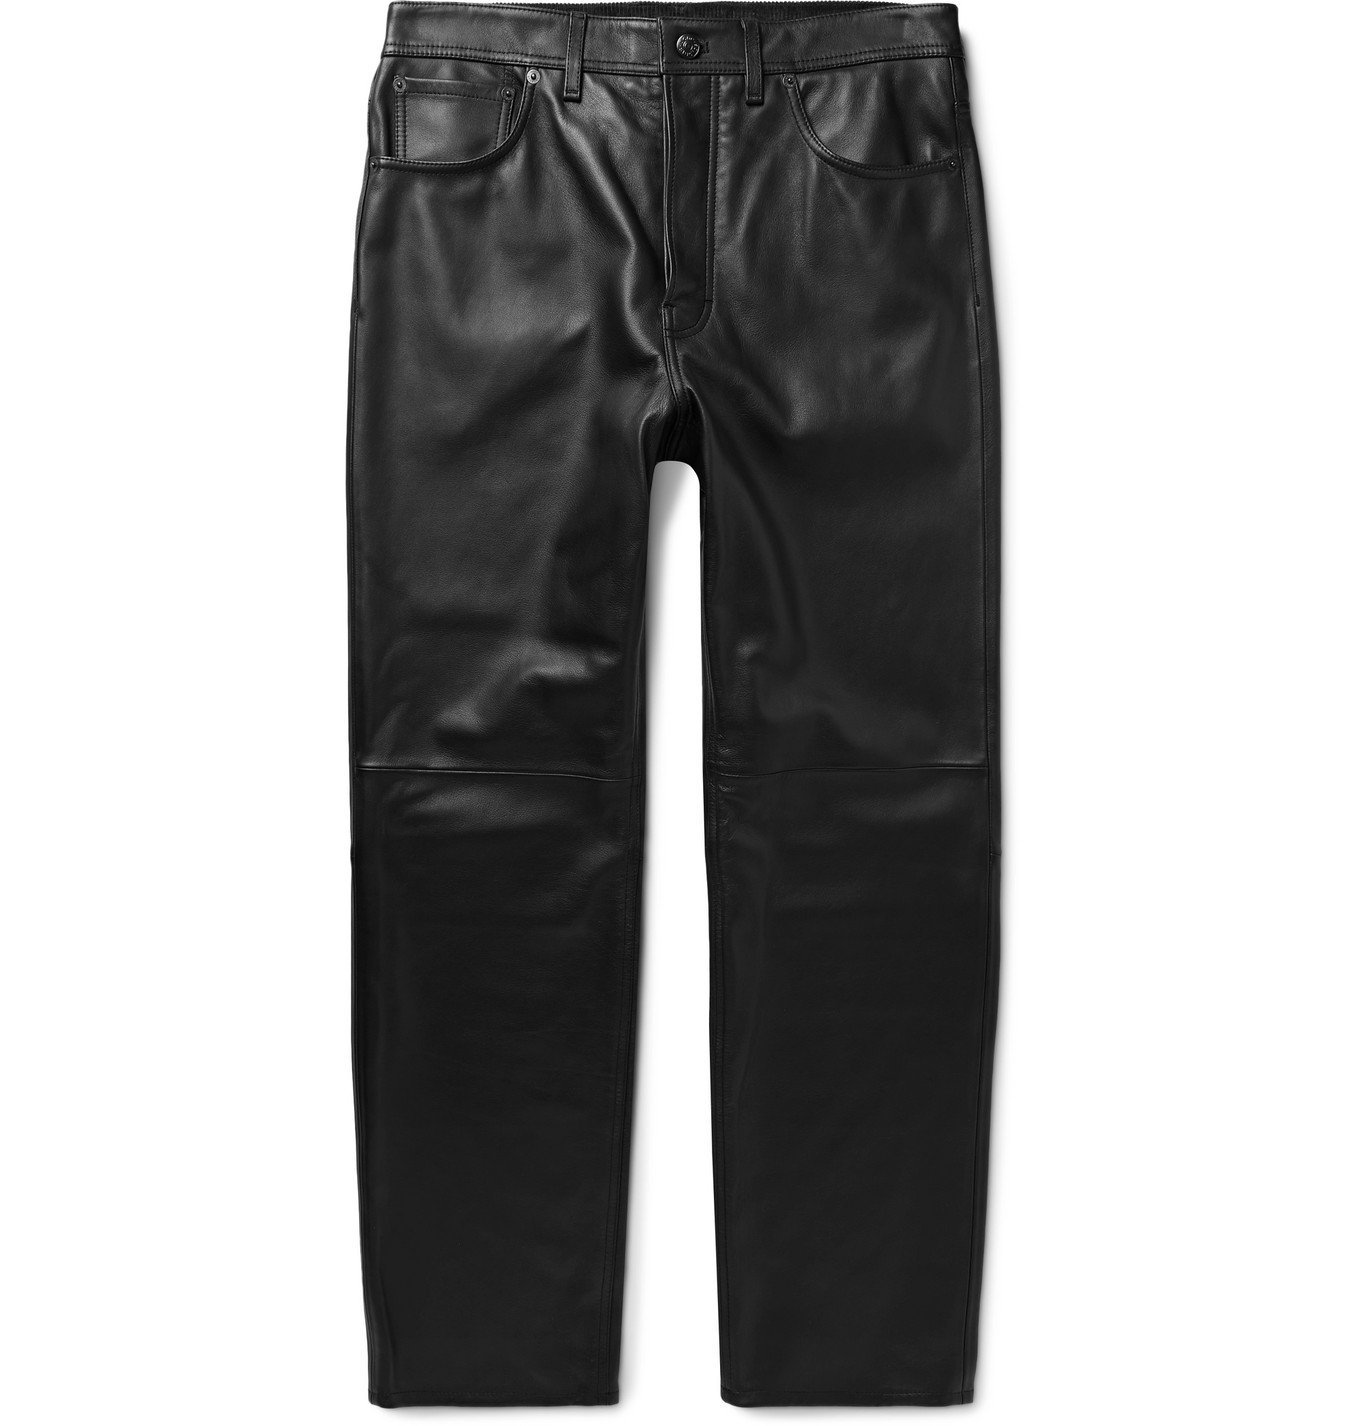 Acne Studios - Leather Trousers - Black Acne Studios